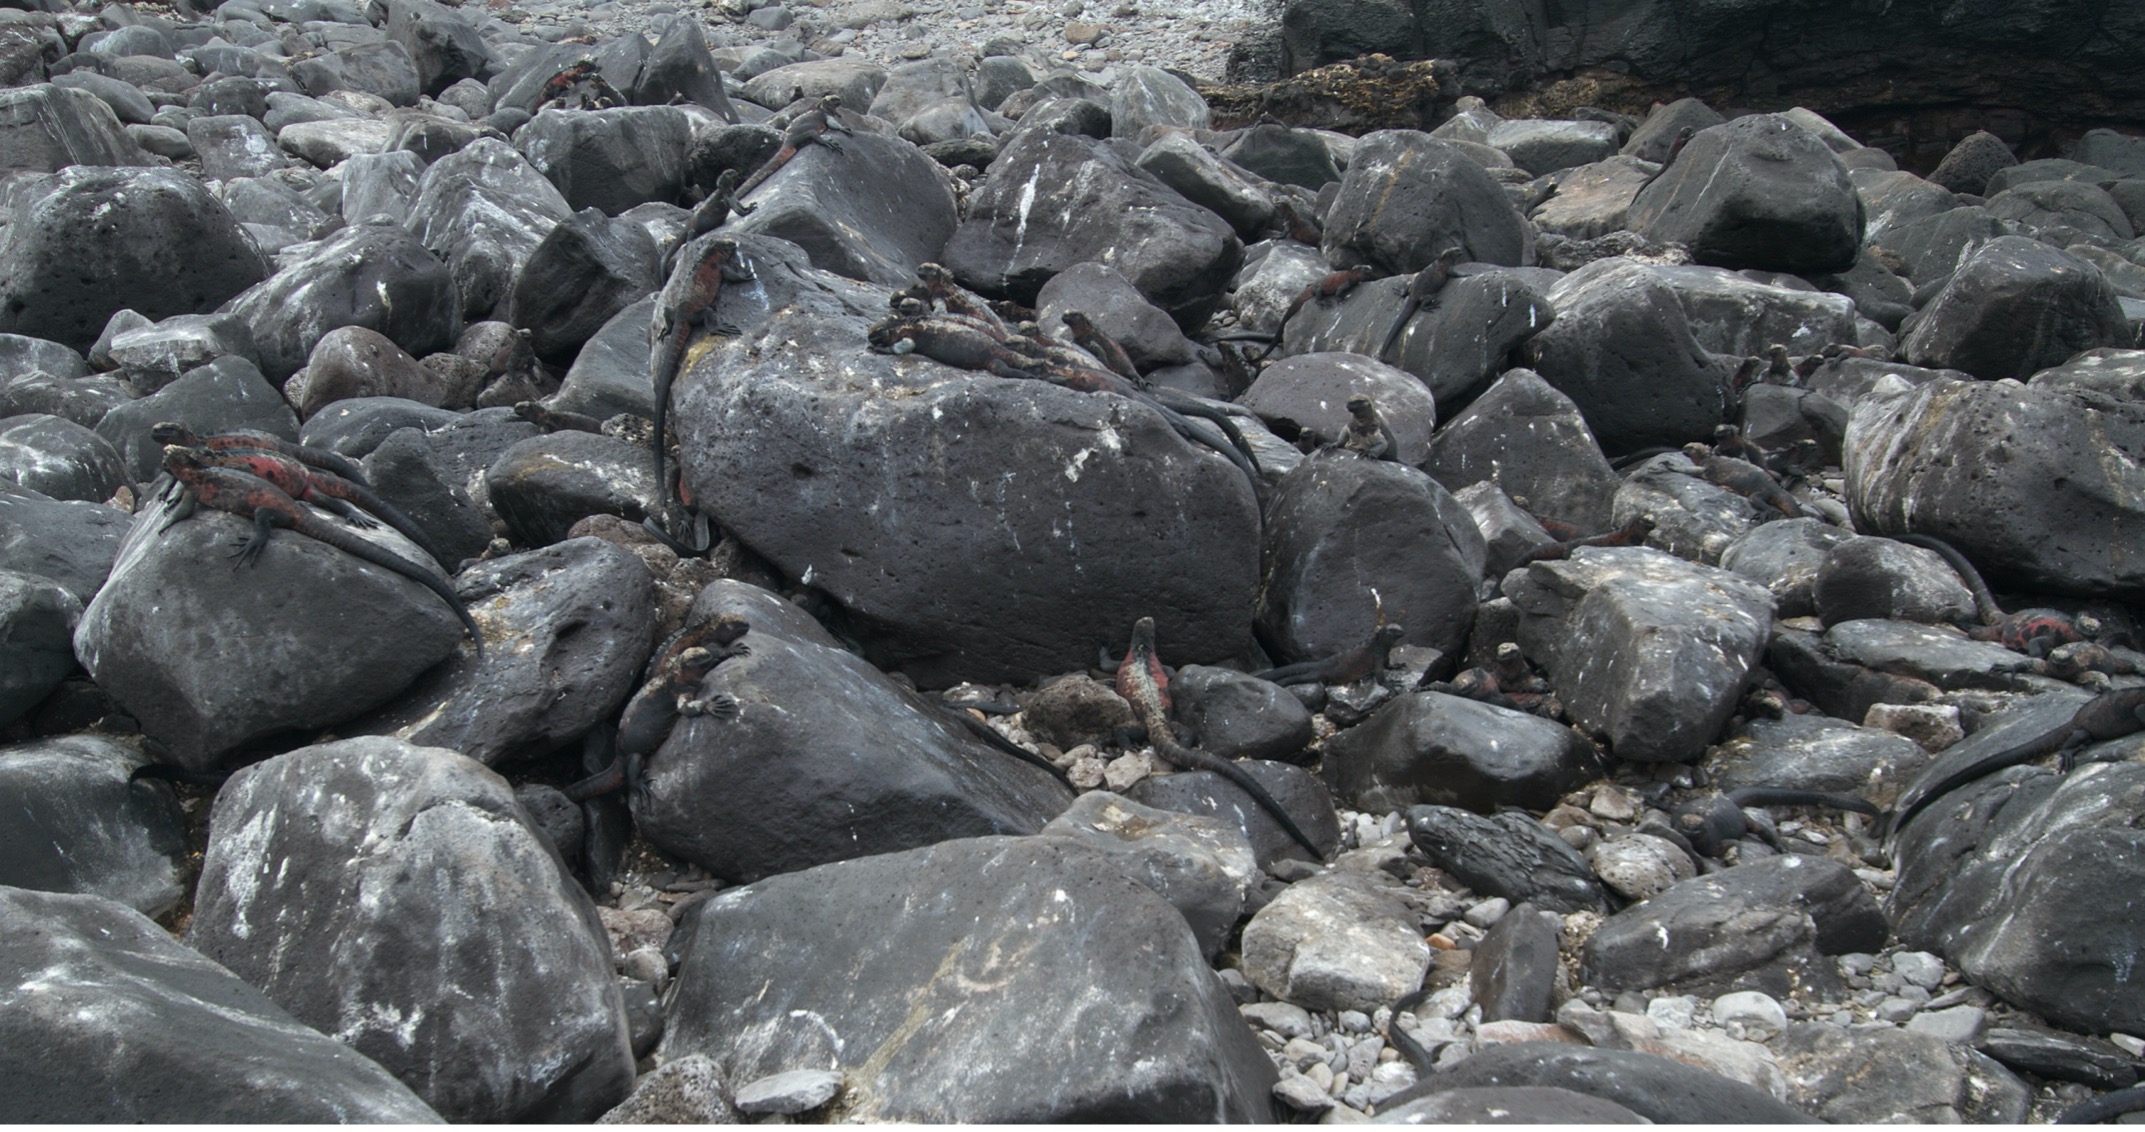 marine iguanas lay on rocks in the galapagos